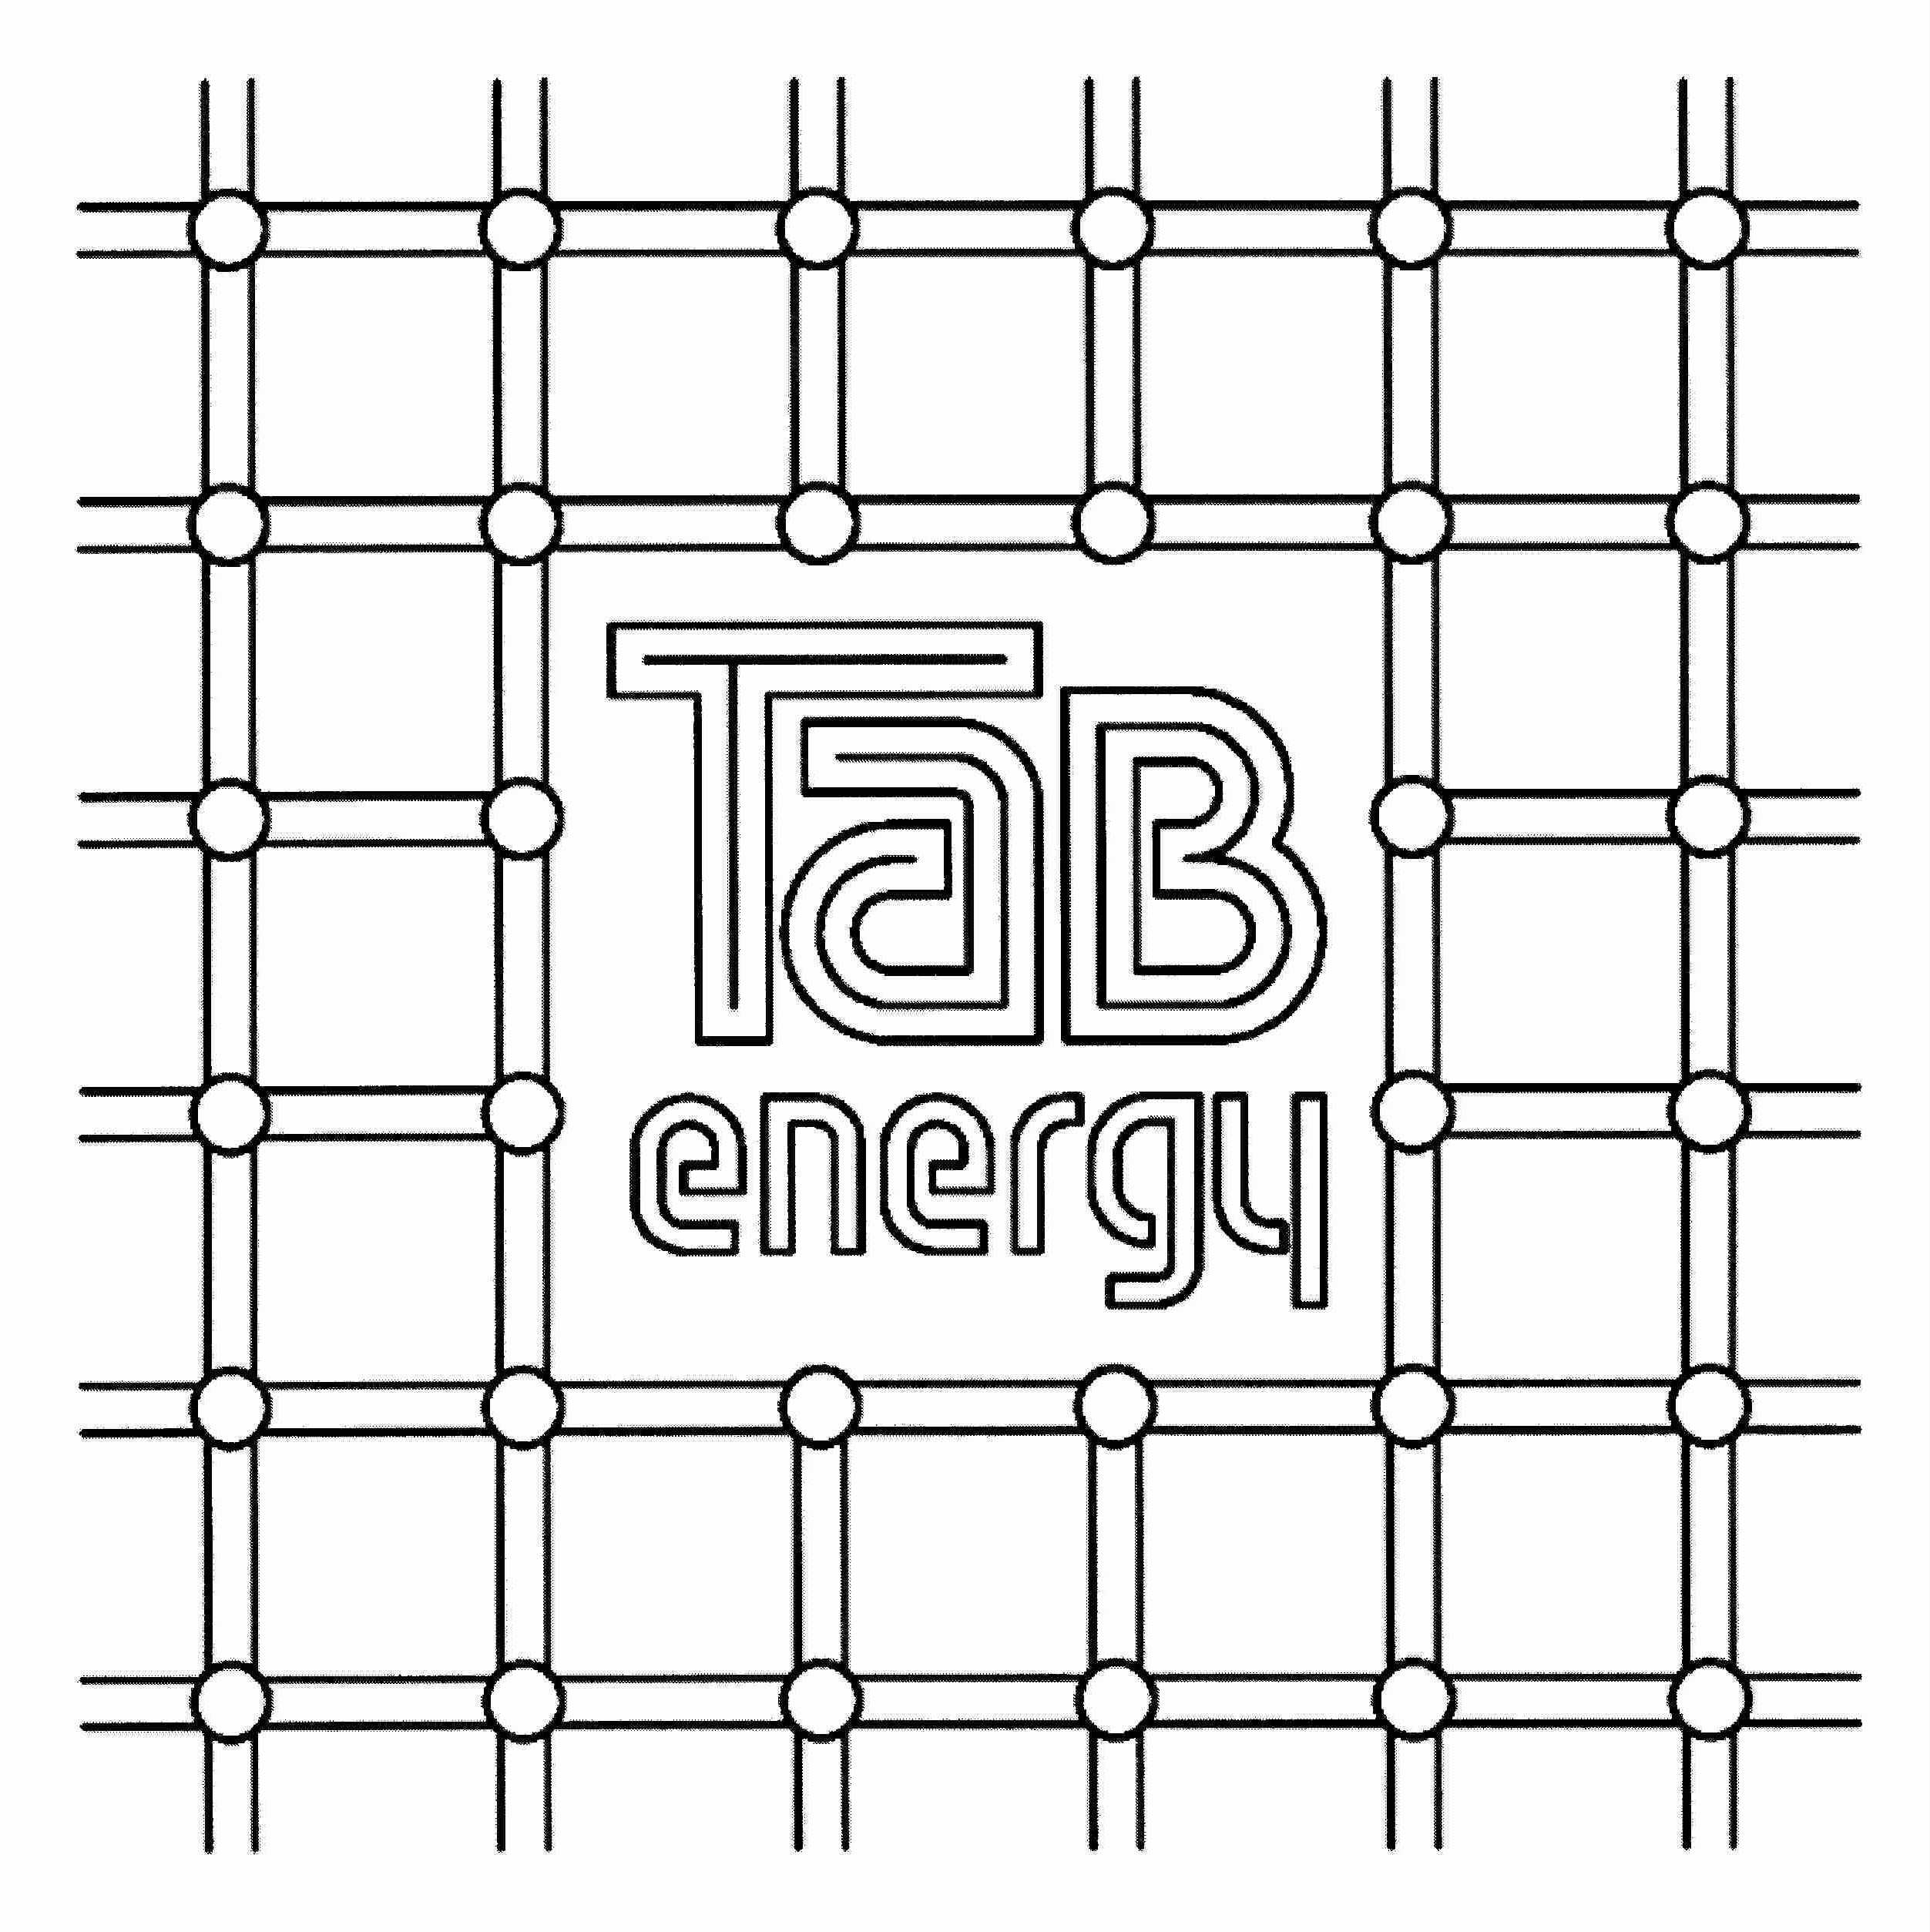  TAB ENERGY